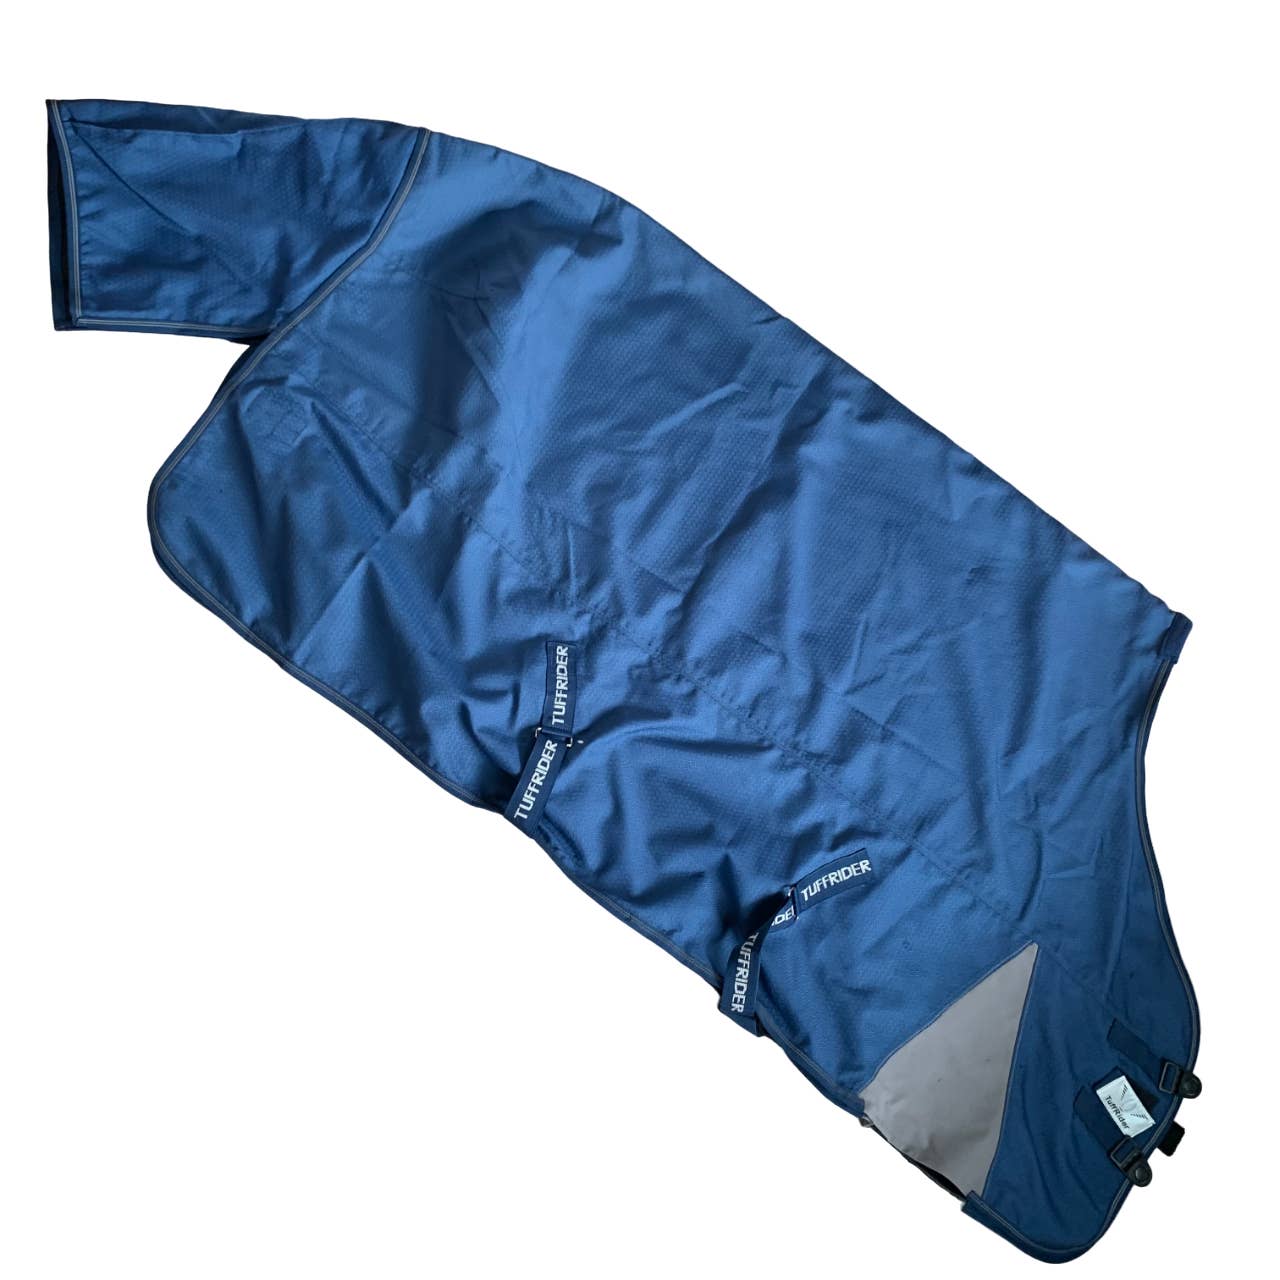 TuffRider 'Optimum' 1680D Triple Weave TO Sheet in Blue - 75"